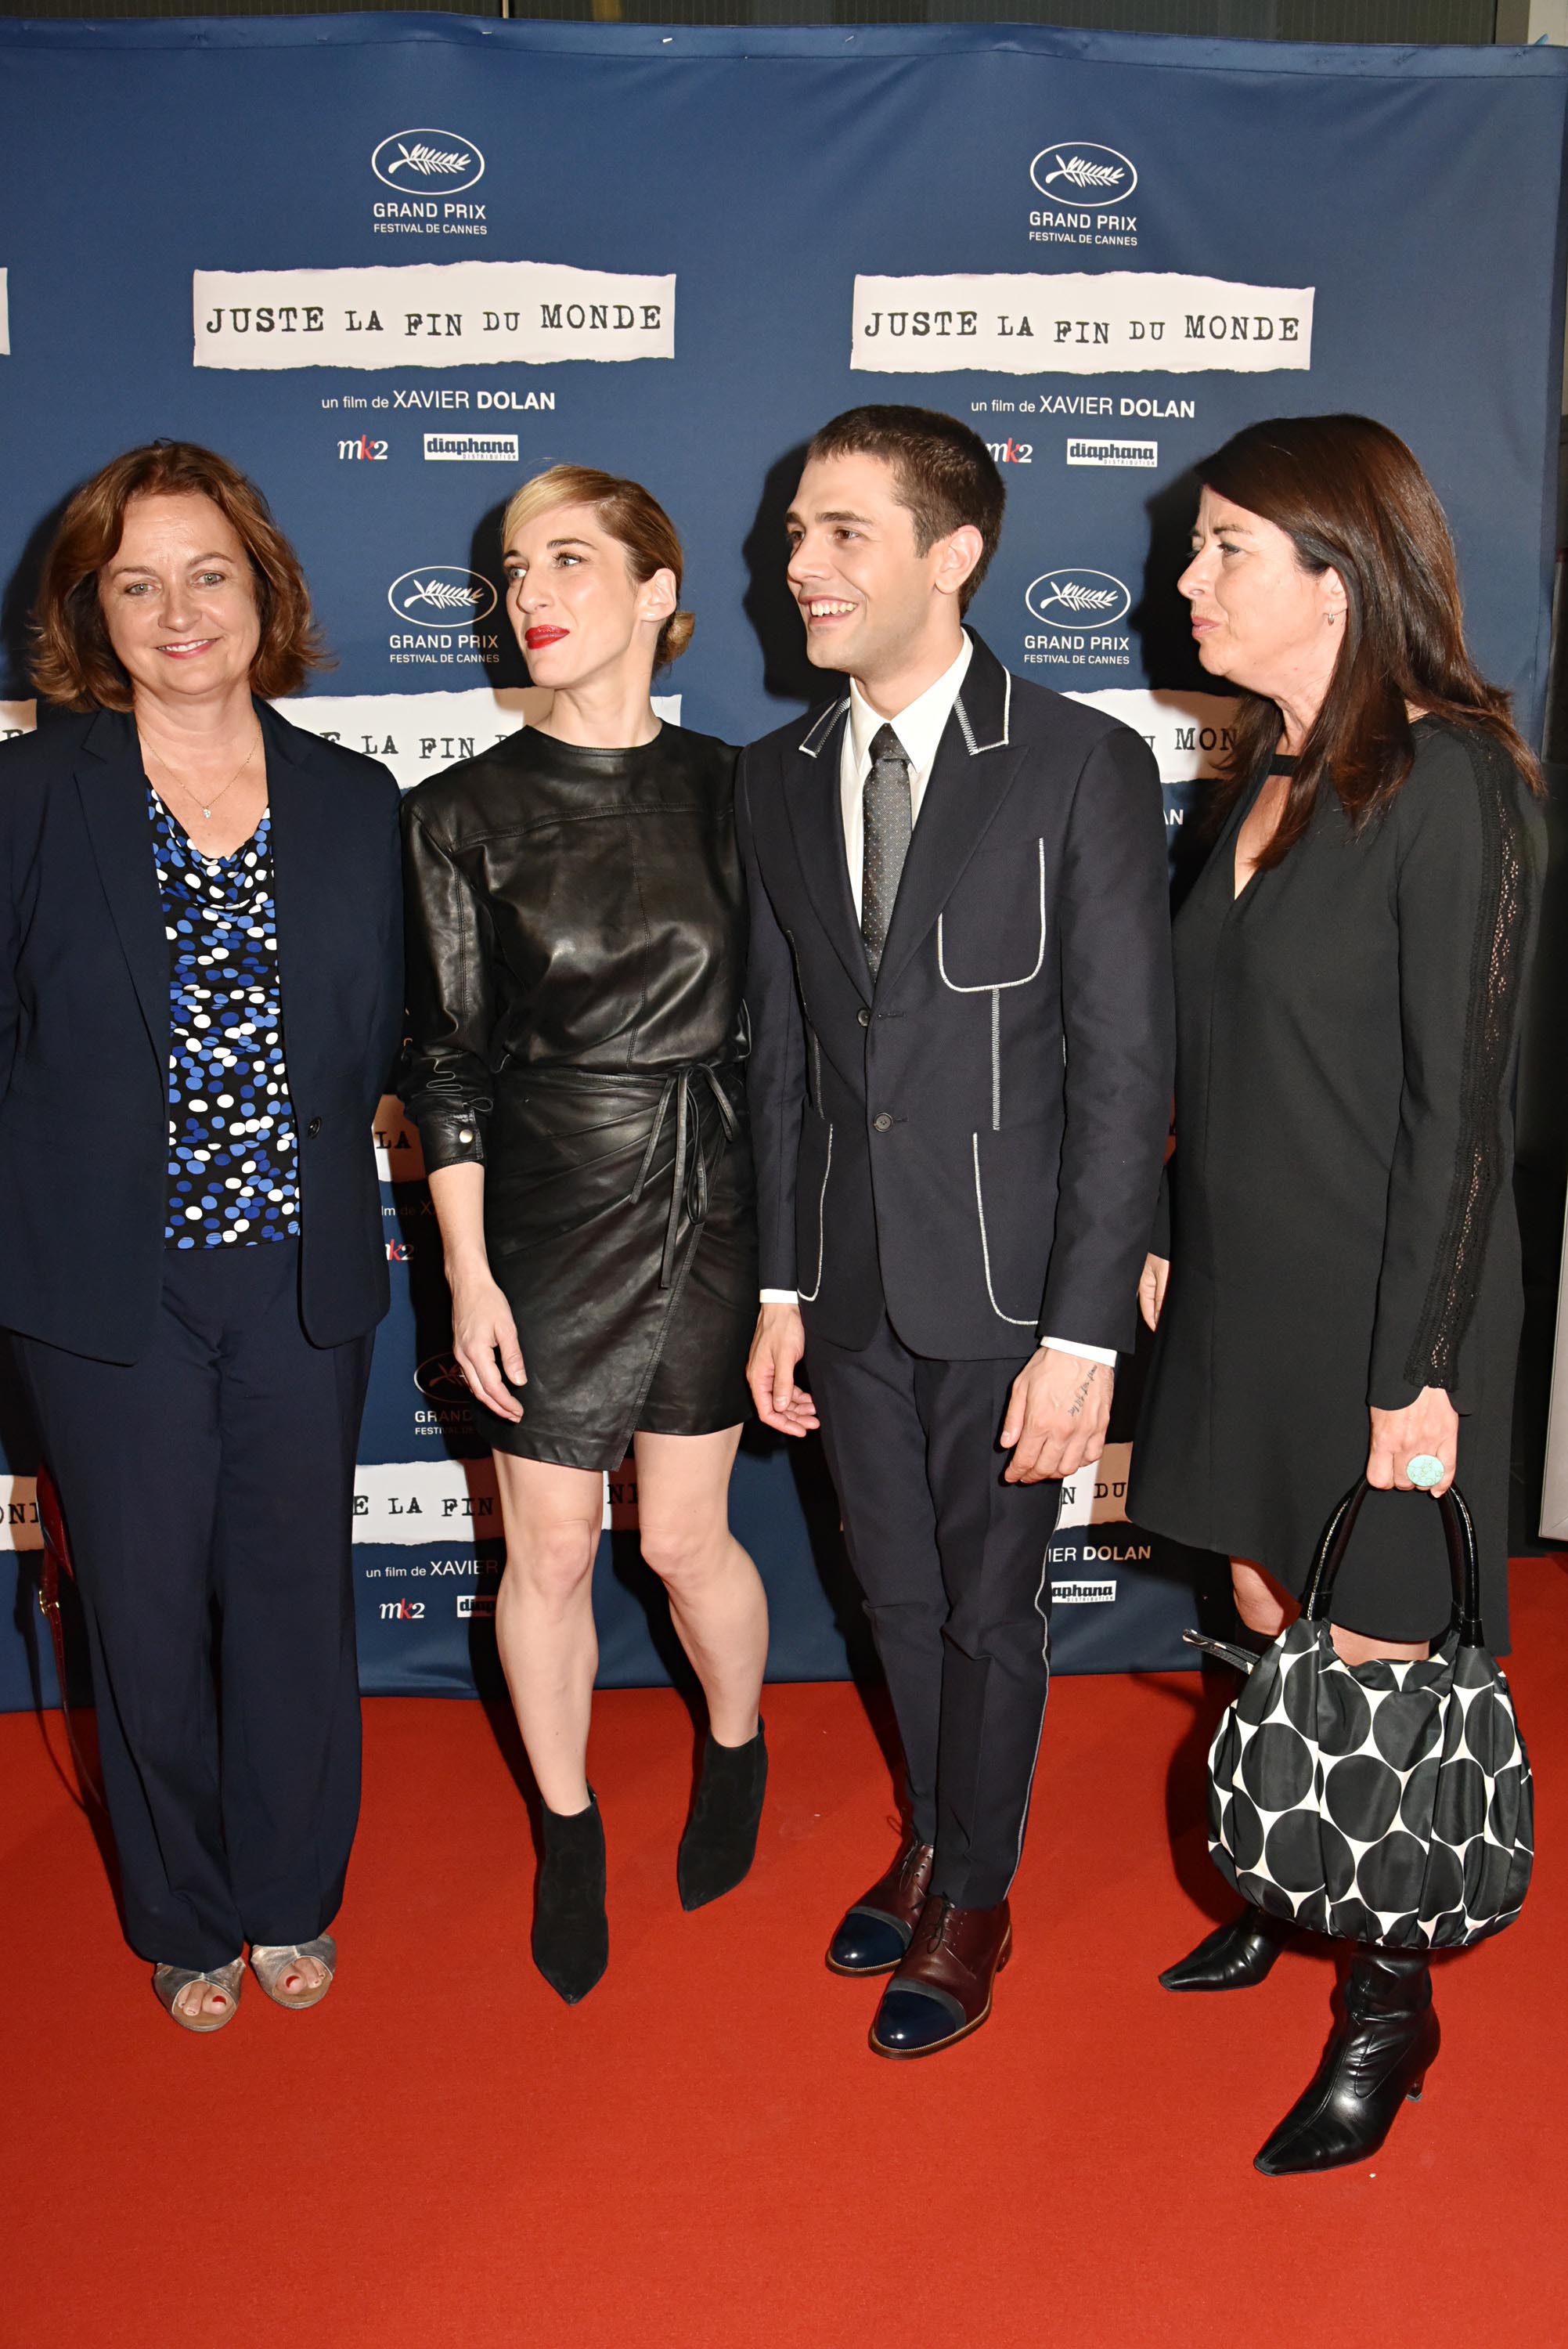 Nancy Grant attends Juste La Fin Du Monde Paris Premiere At MK2 Bibliotheque